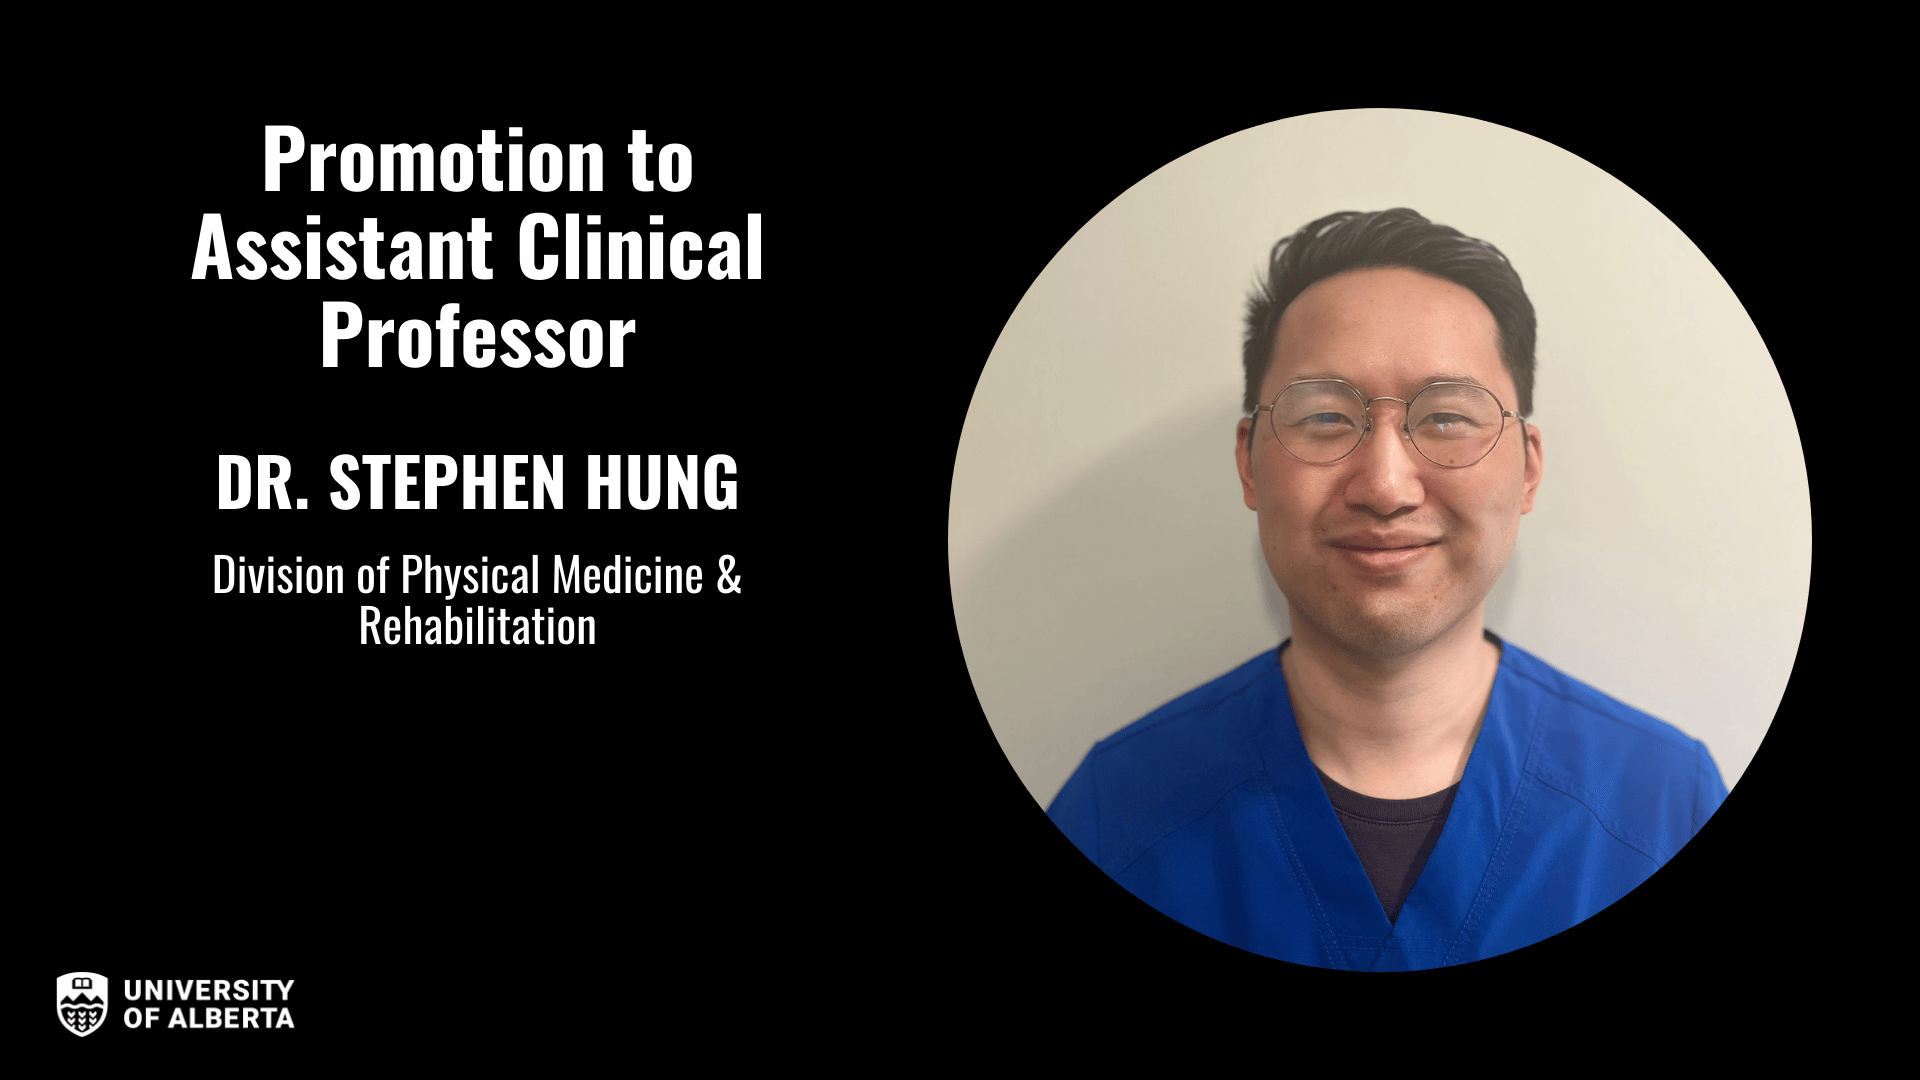 Dr. Stephen Hung